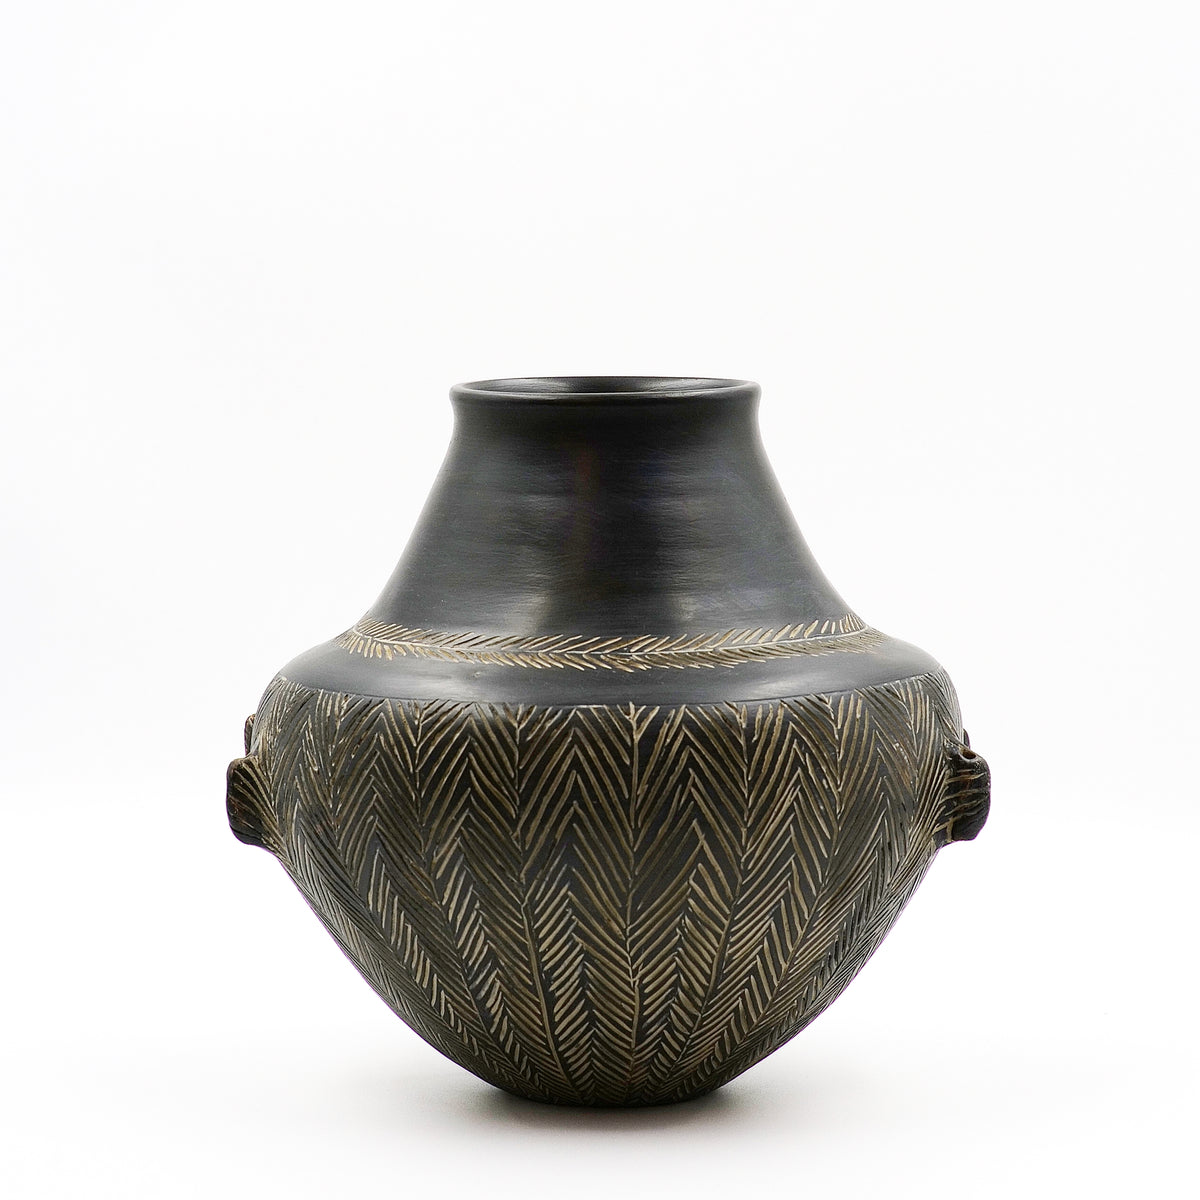 Ancient Mycenaean Ceramic Kitchen Toys Pretend Play Set — Attic Black